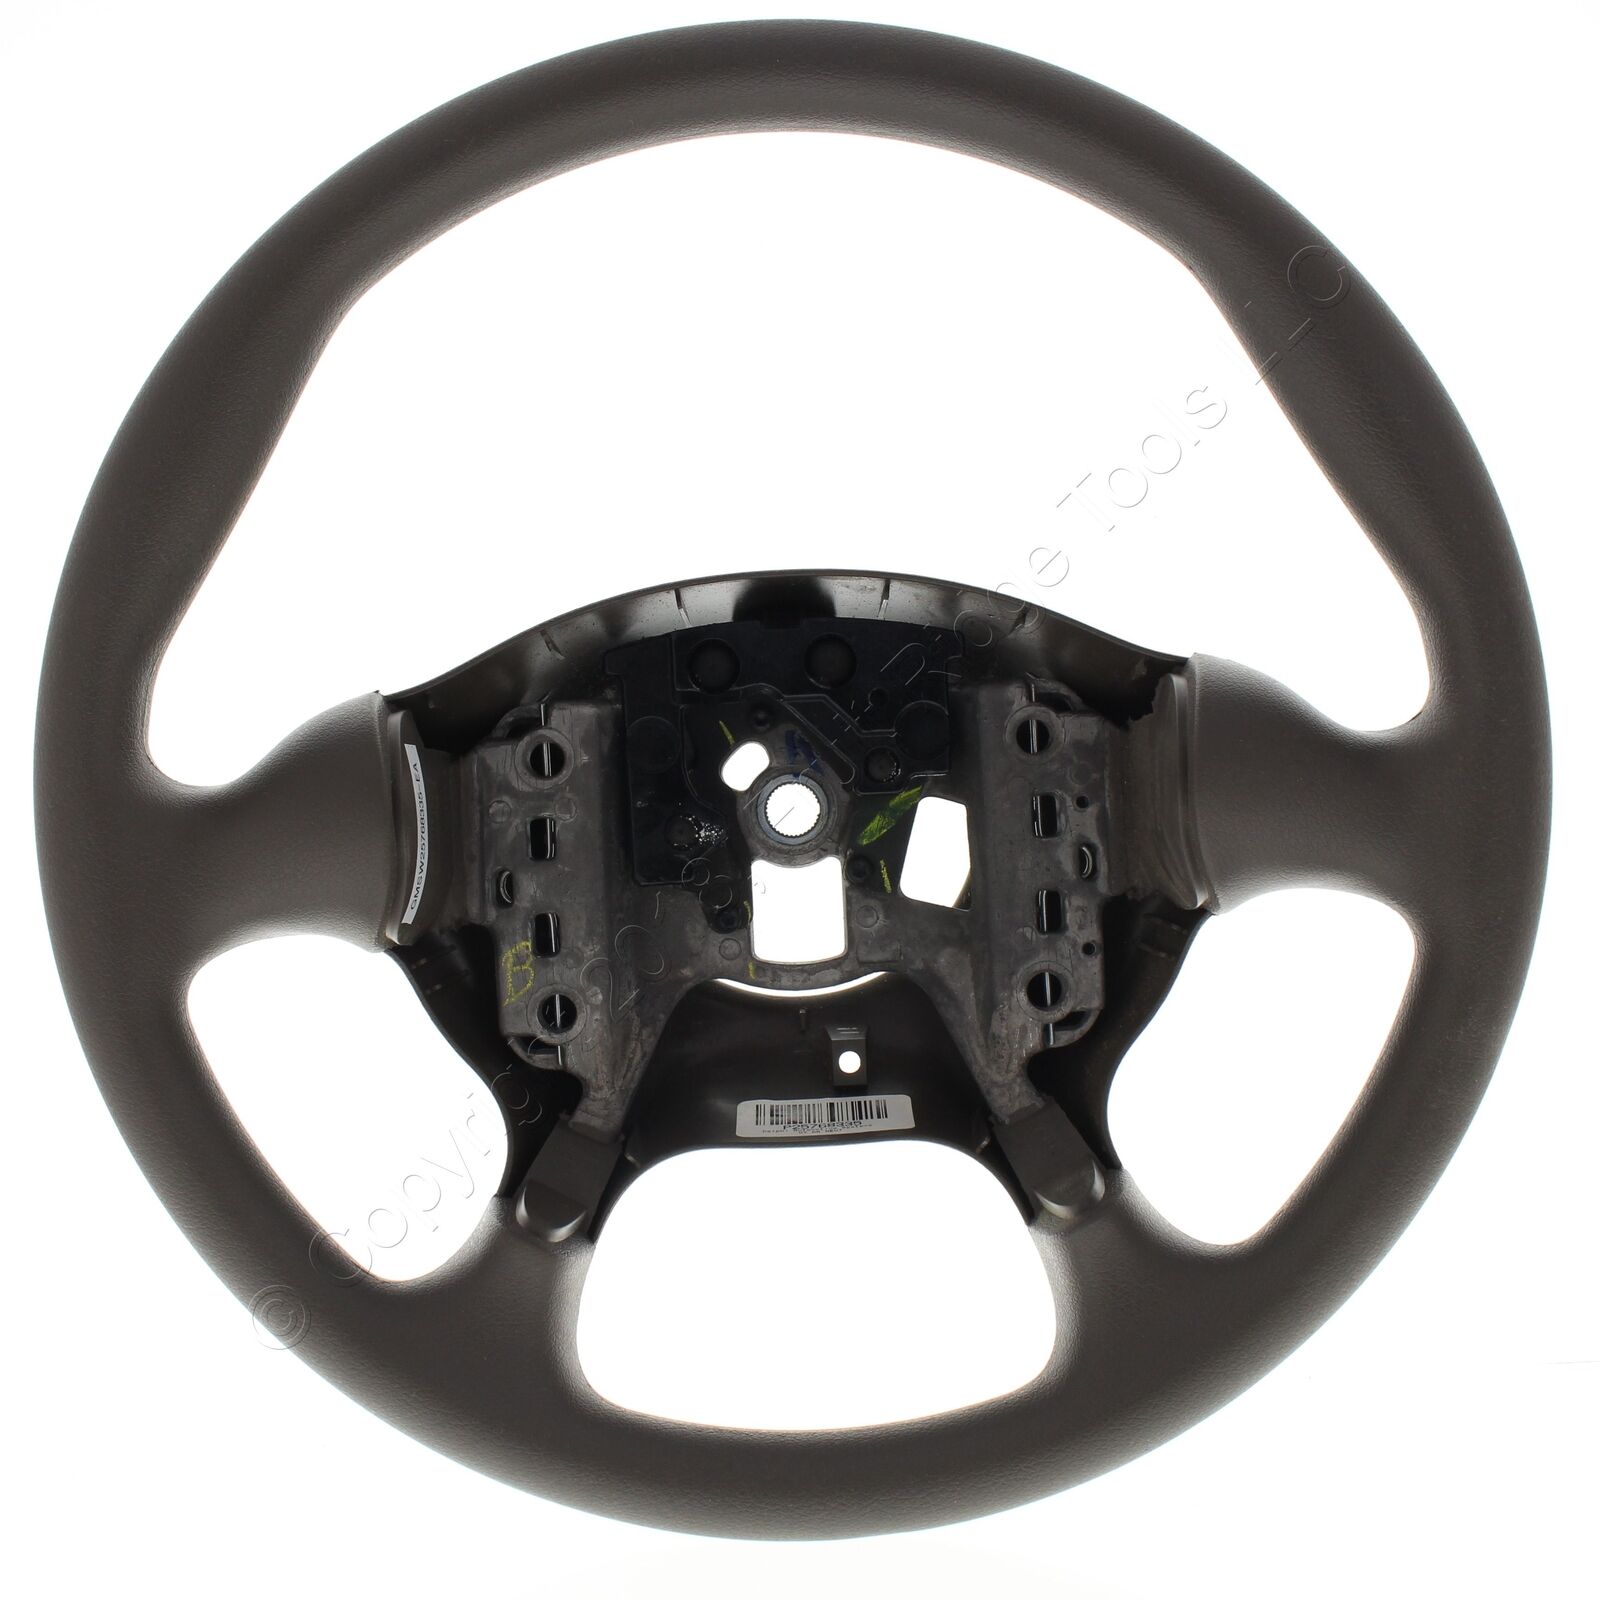 GM OEM Dark Neutral Vinyl Steering Wheel #25768335 fits 2002-2005 Bonneville